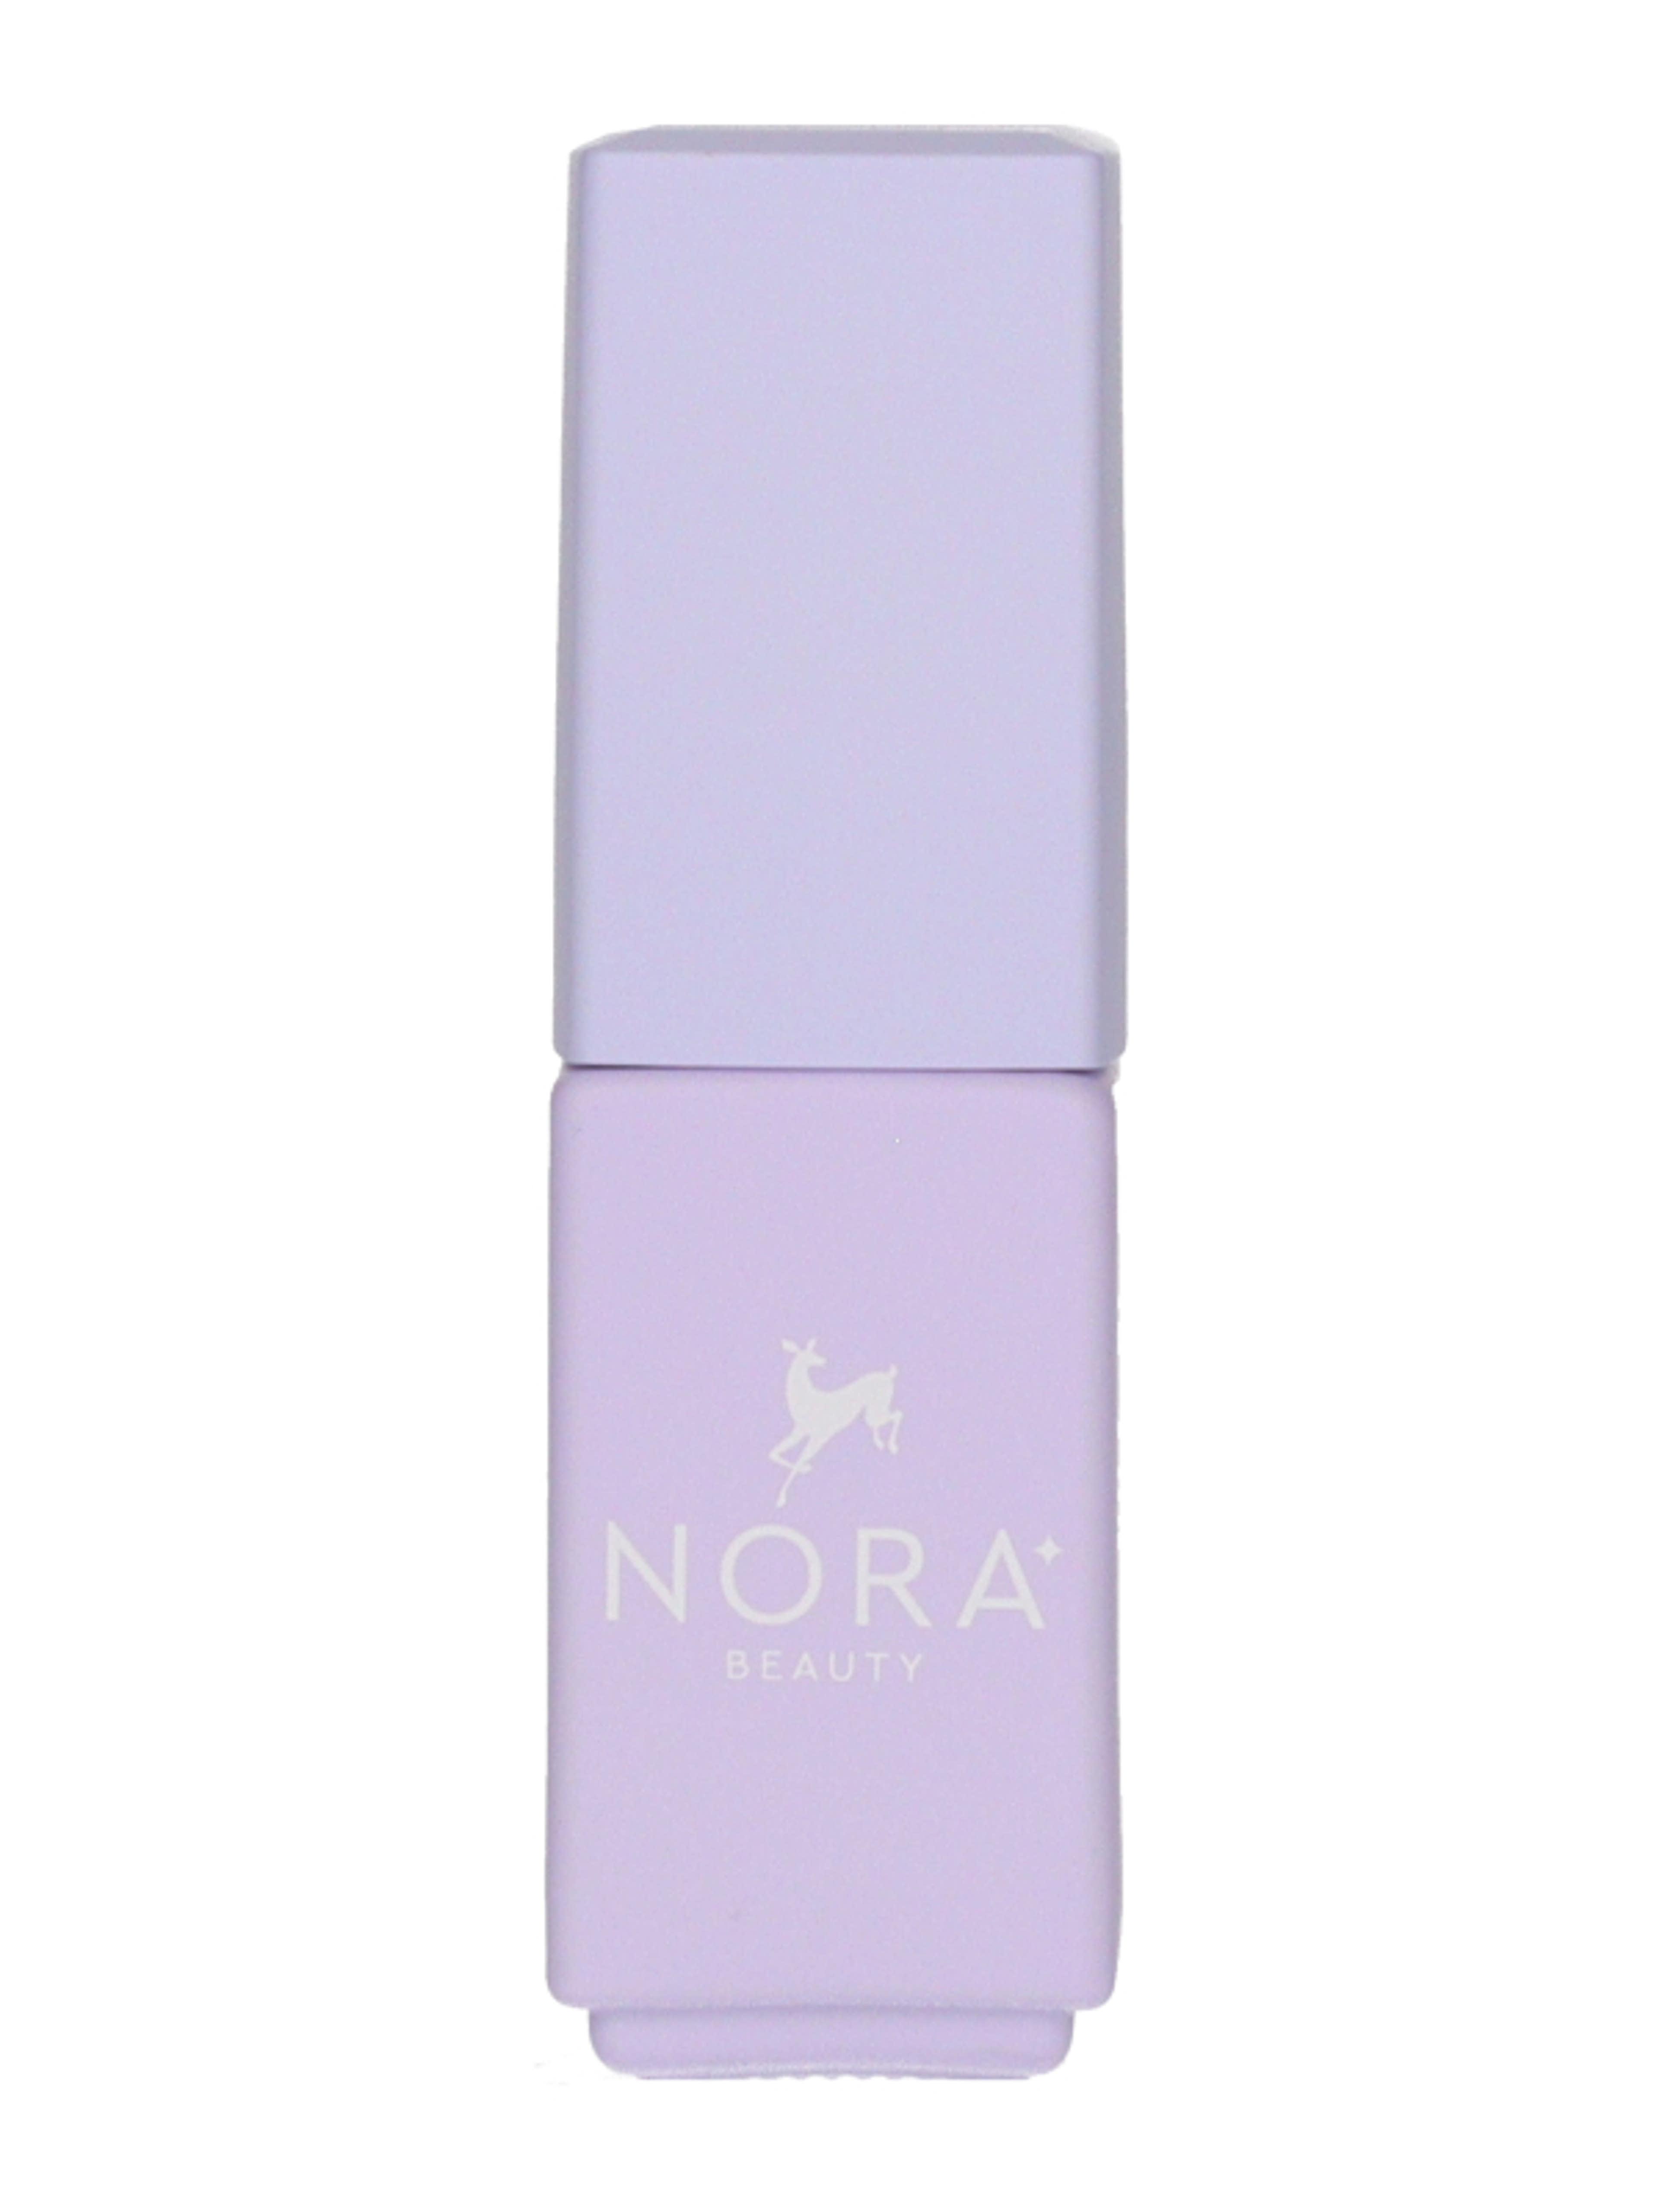 Nora Beauty UV lakkzselé /cn-02 Royal burgundy - 1 db-3